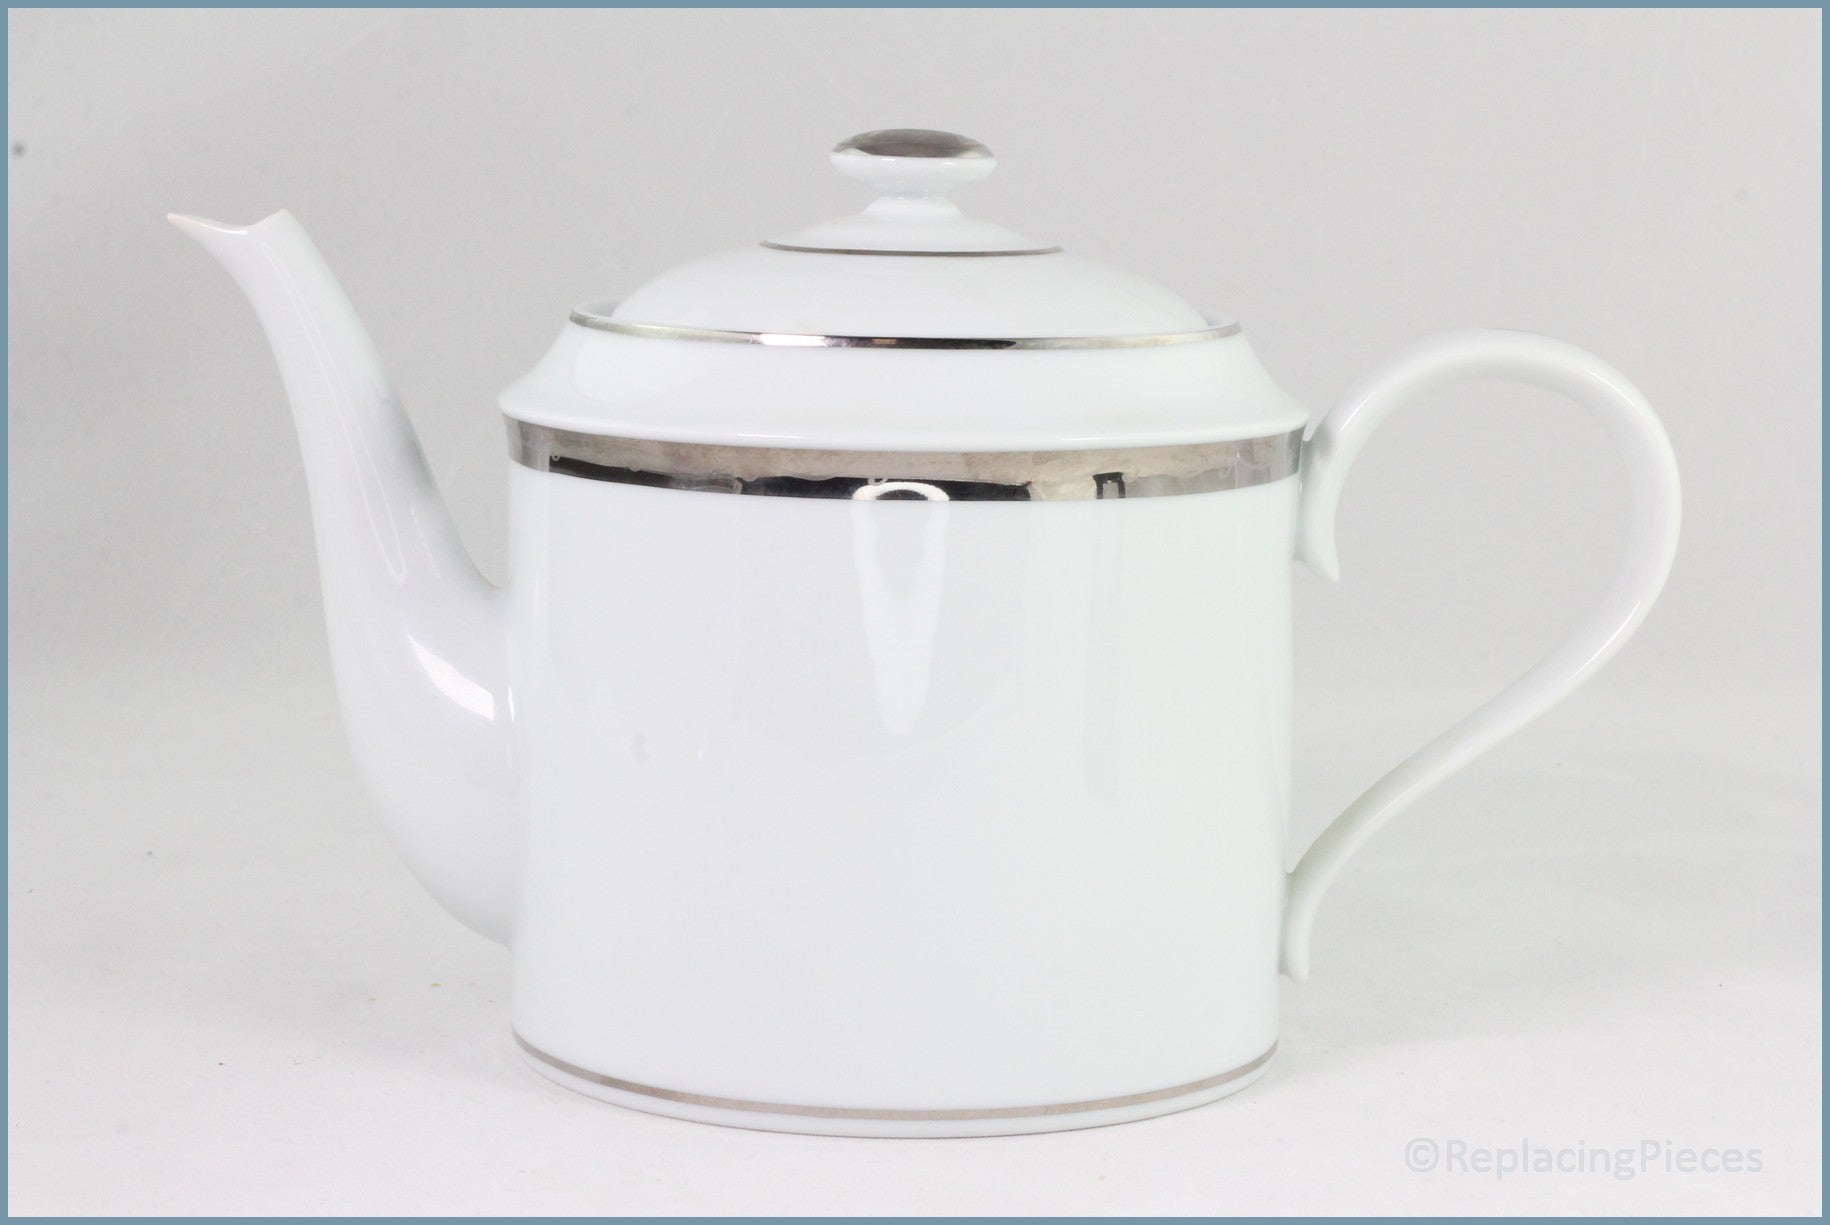 Marks & Spencer - Platinum (Home) - Teapot